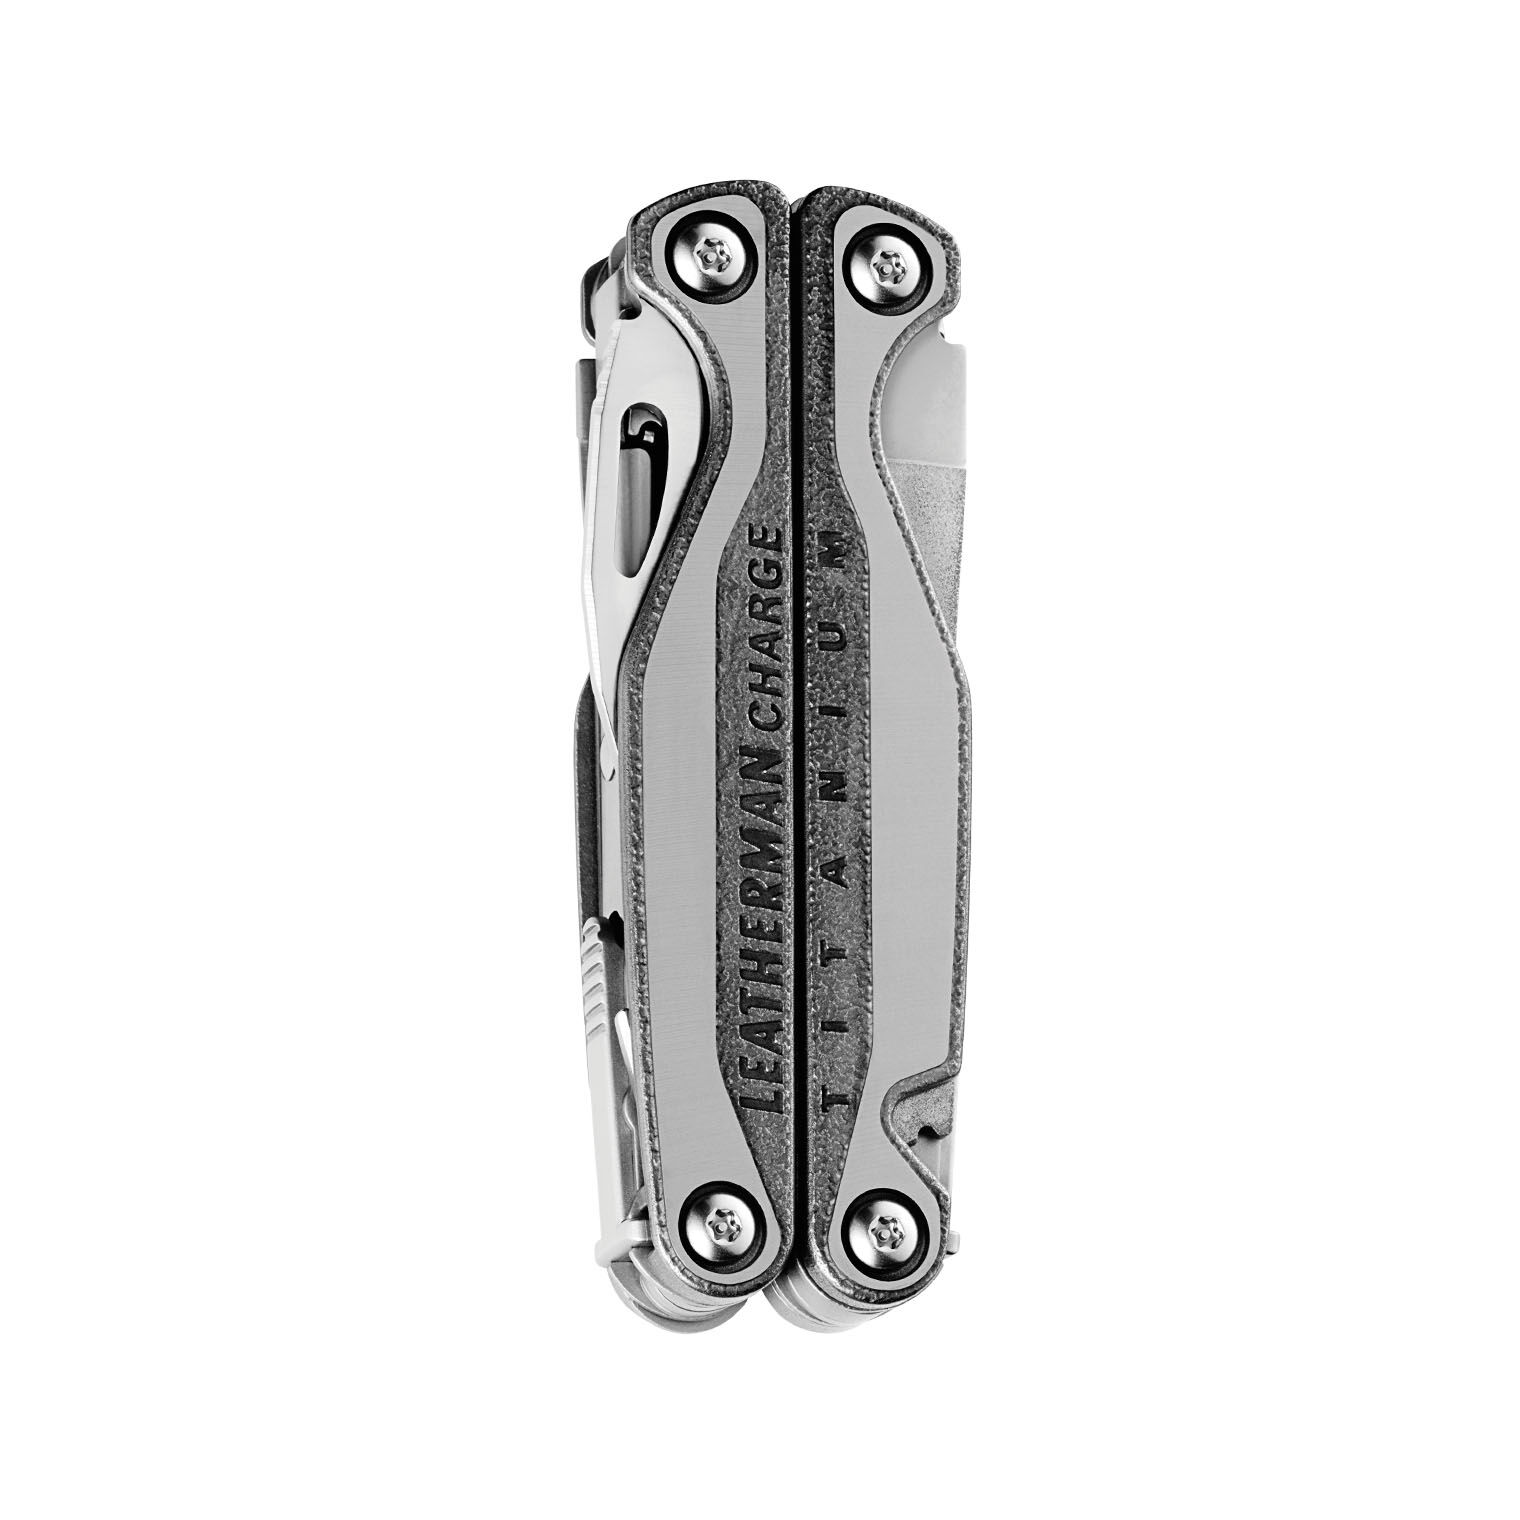 Share 82+ titanium multi tool bracelet - POPPY